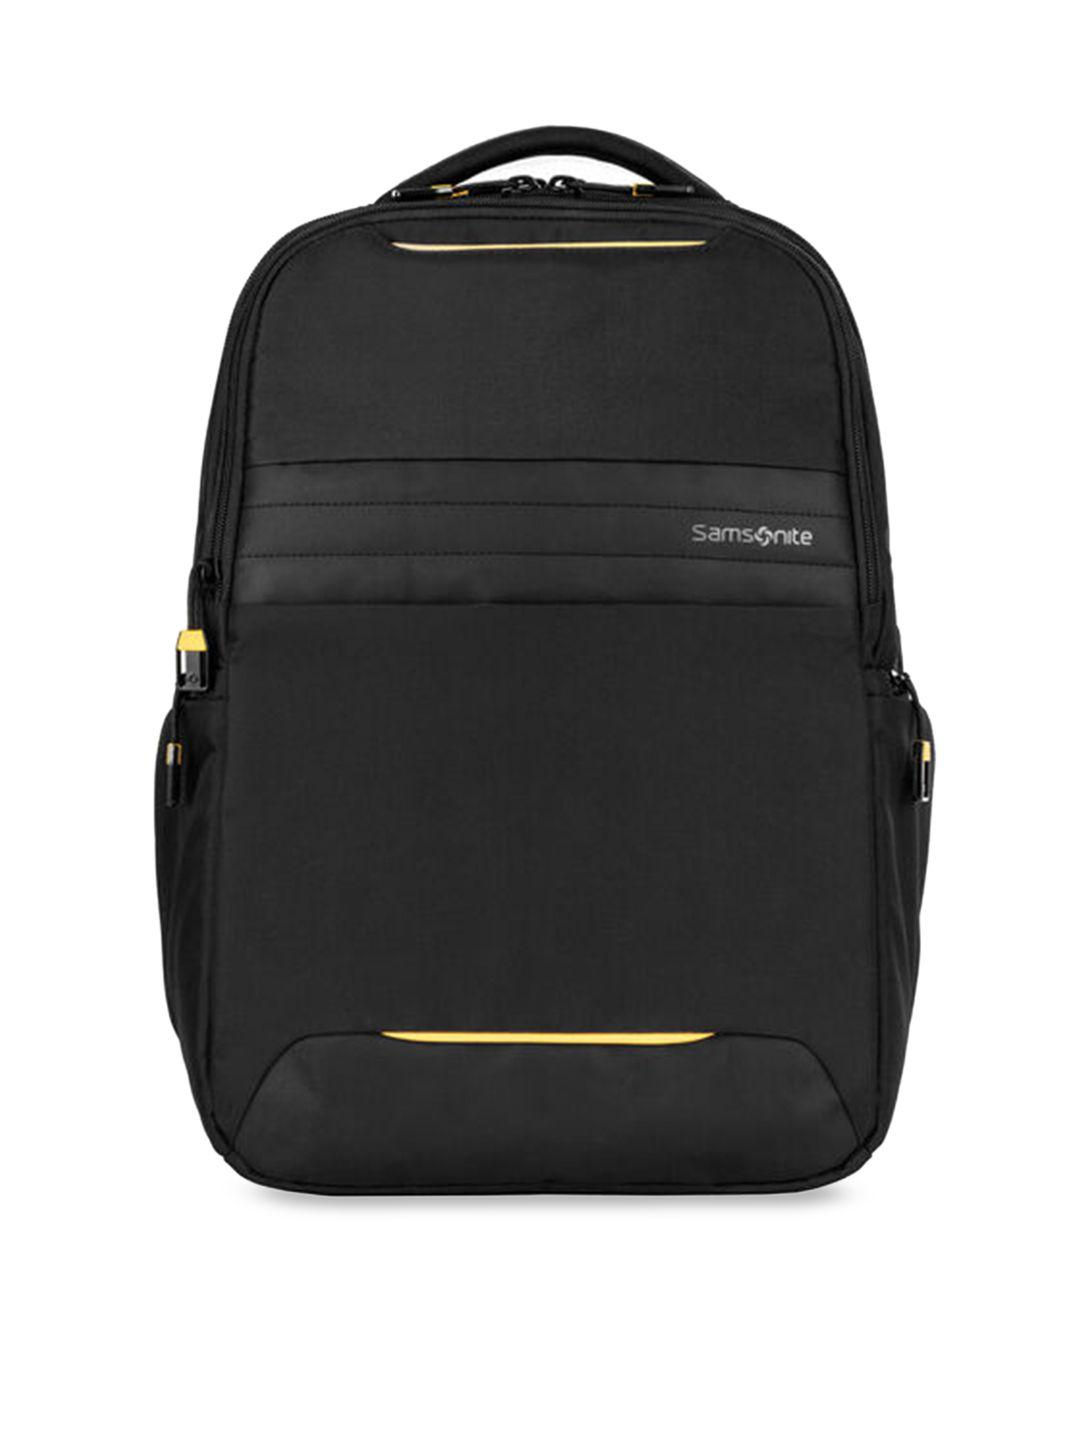 samsonite unisex black laptop backpack